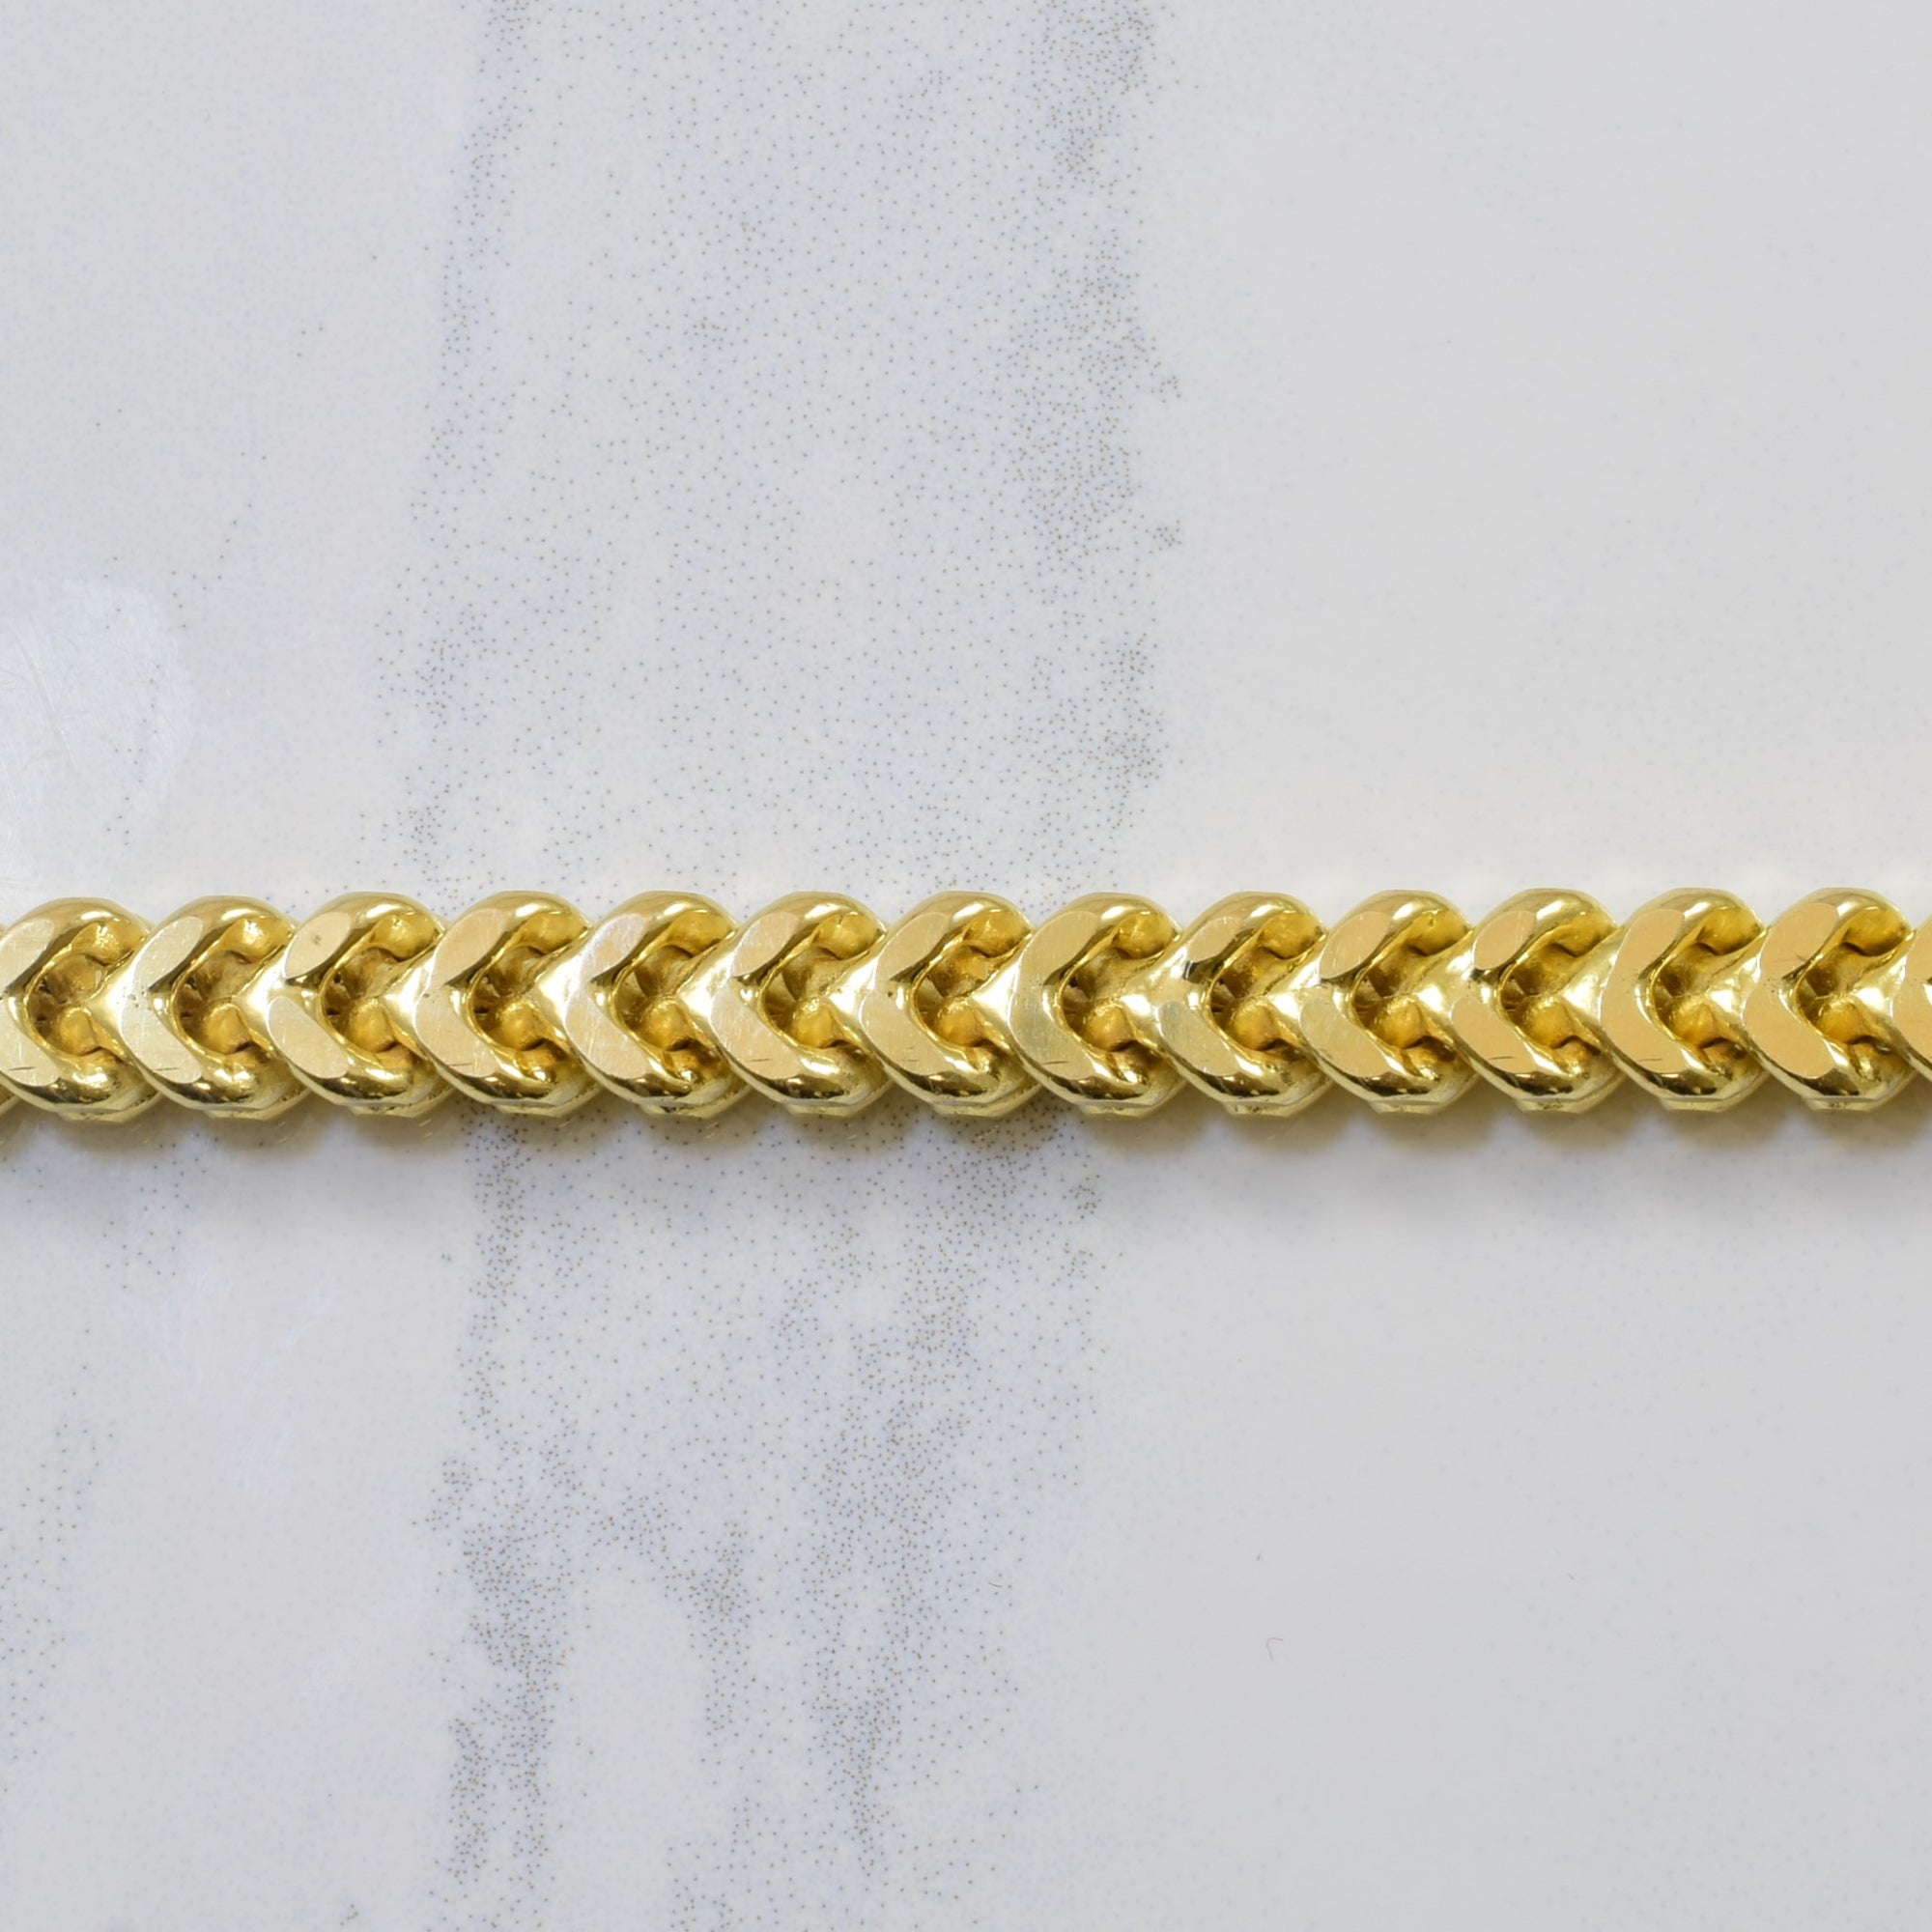 Double Link Heavy Curb Chain Bracelet | 8